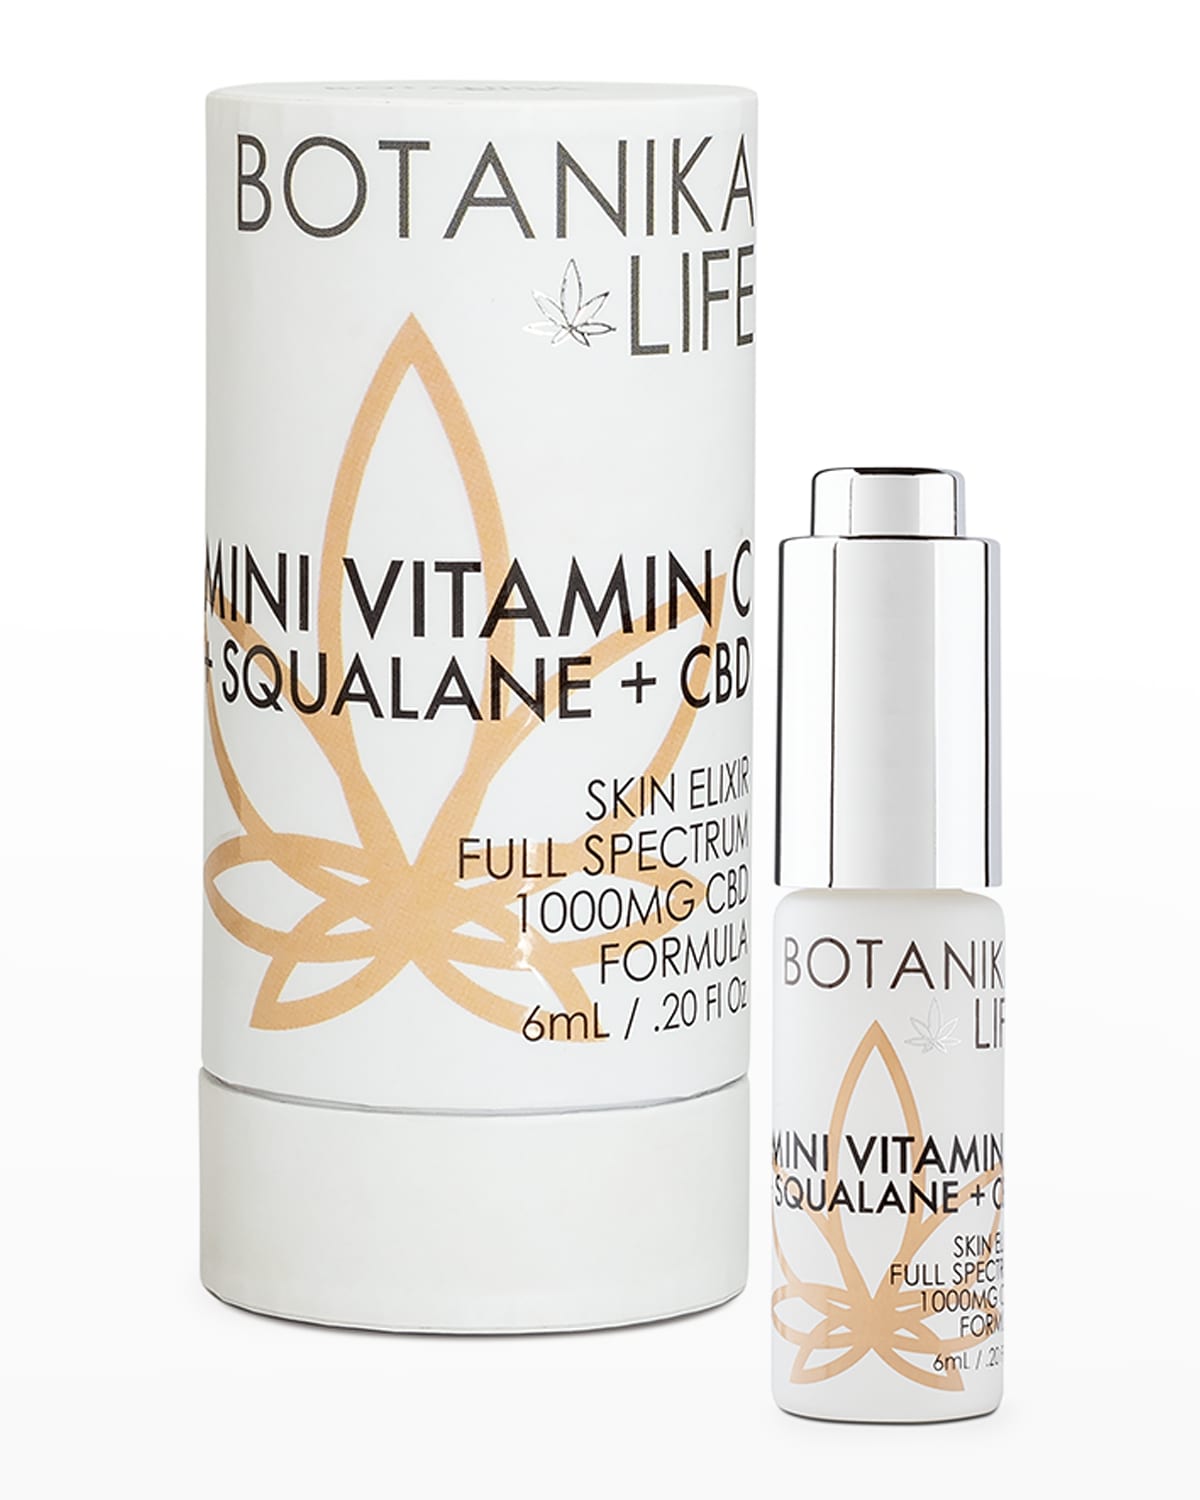 Botanika Life Mini Vitamin C Skin Elixir